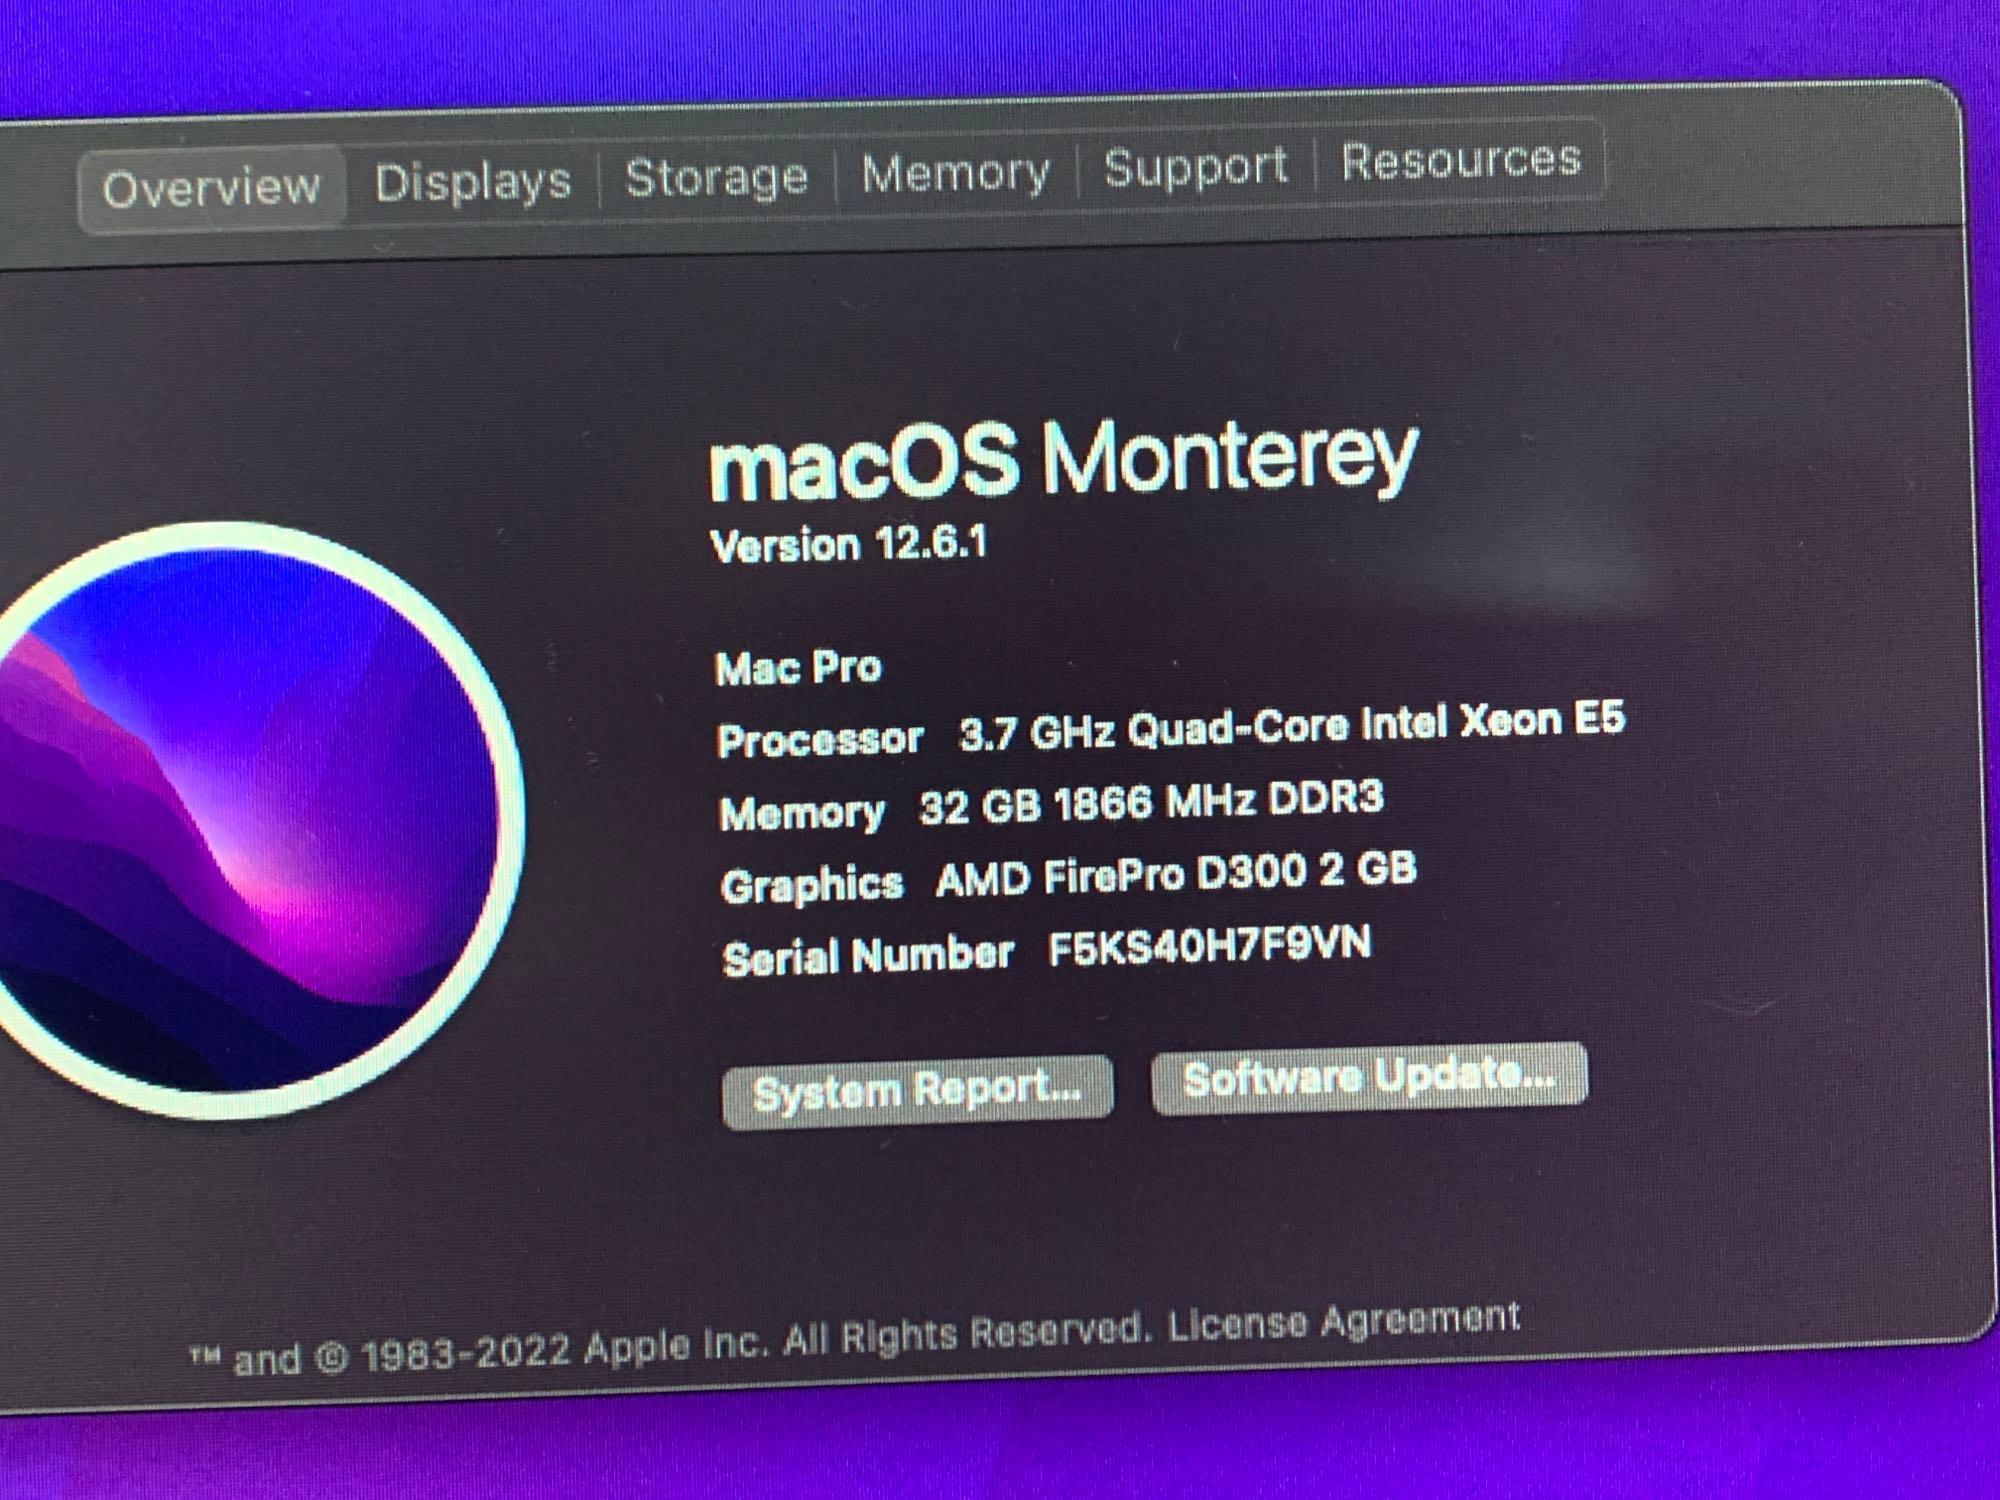 Apple MacPro6,1 Quad Intel Xeon E5-1620 3.7GHz 32GB 1TB SSD HDMI AMD Video 2GB Monterey 2013